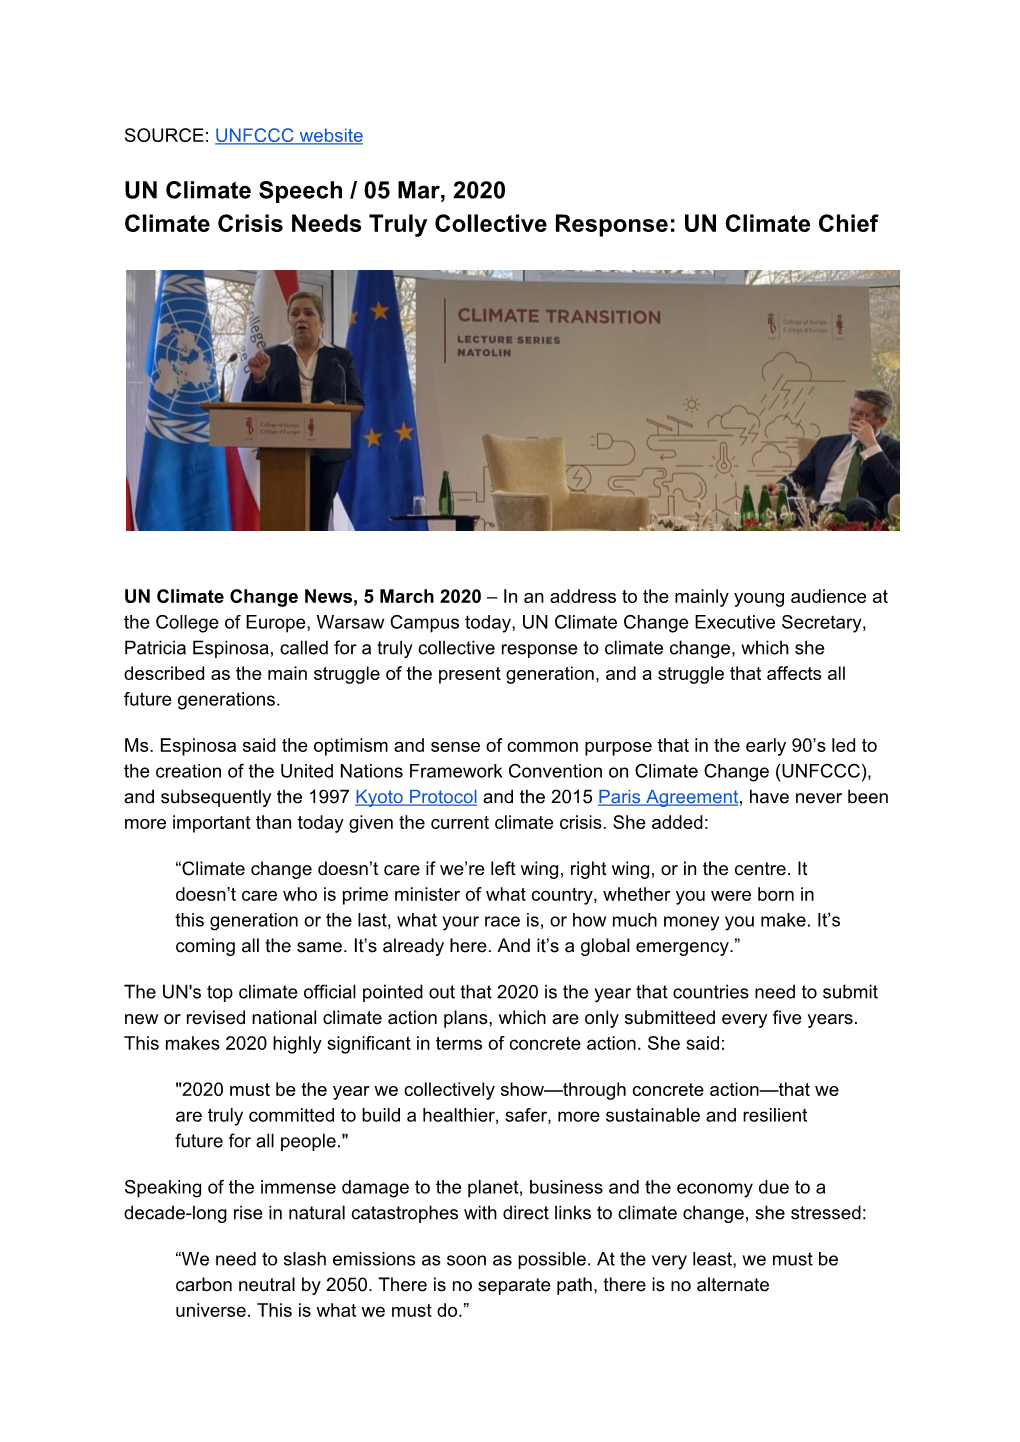 UN Climate Speech / 05 Mar, 2020 Climate Crisis Needs Truly Collective Response: UN Climate Chief